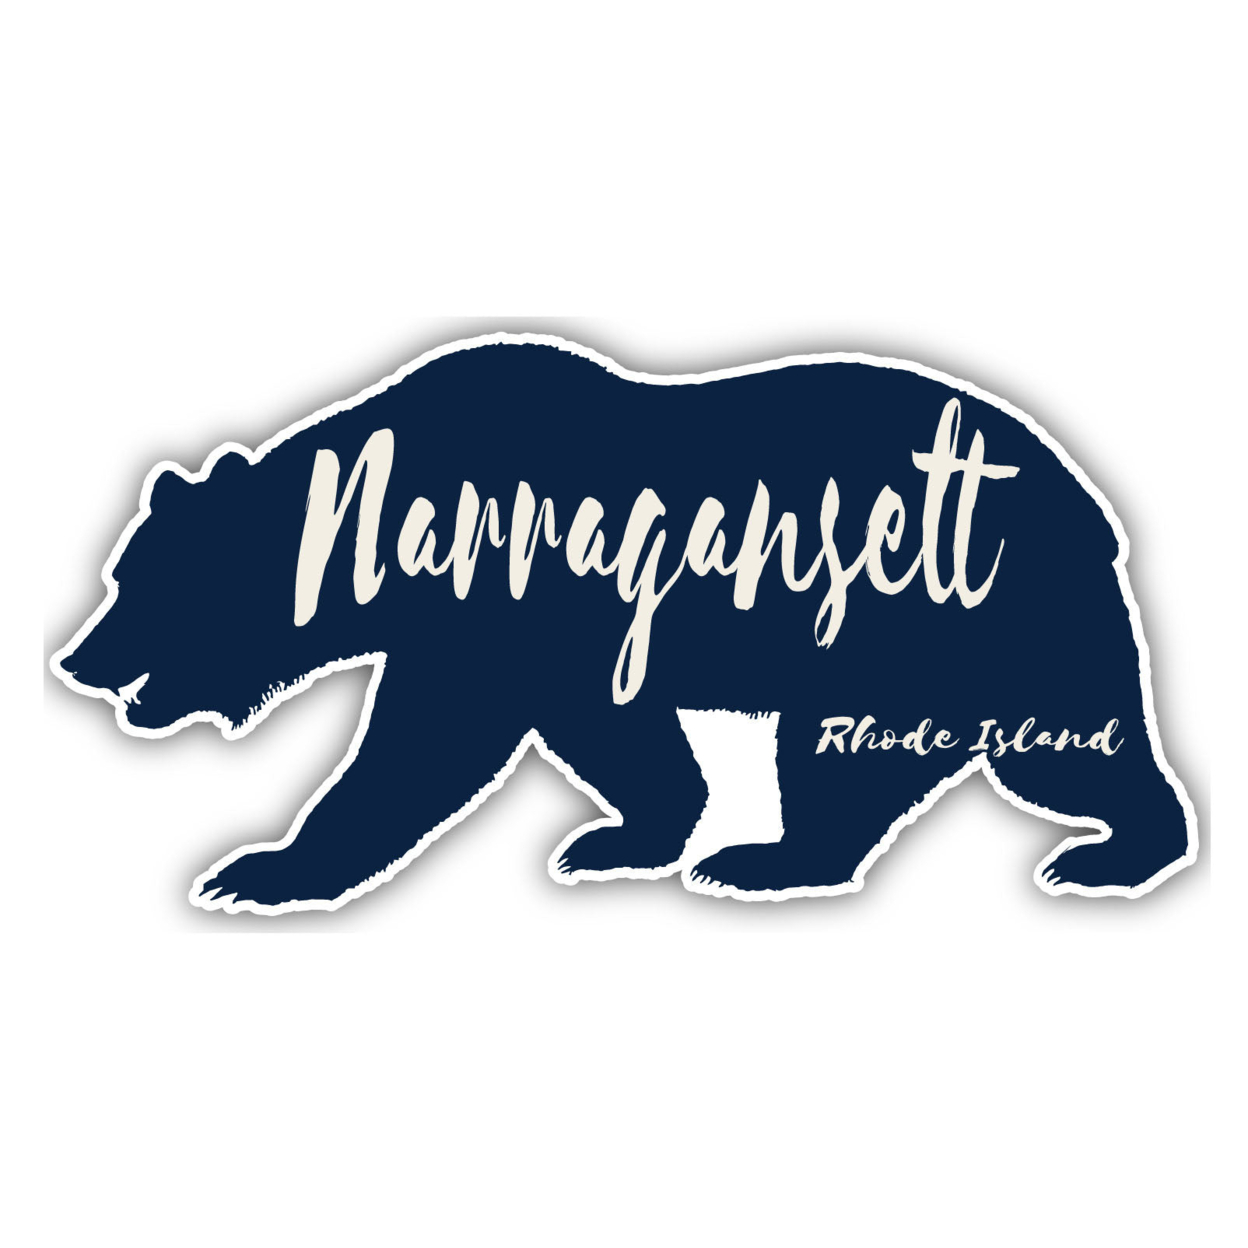 Narragansett Rhode Island Souvenir Decorative Stickers (Choose Theme And Size) - Single Unit, 4-Inch, Tent